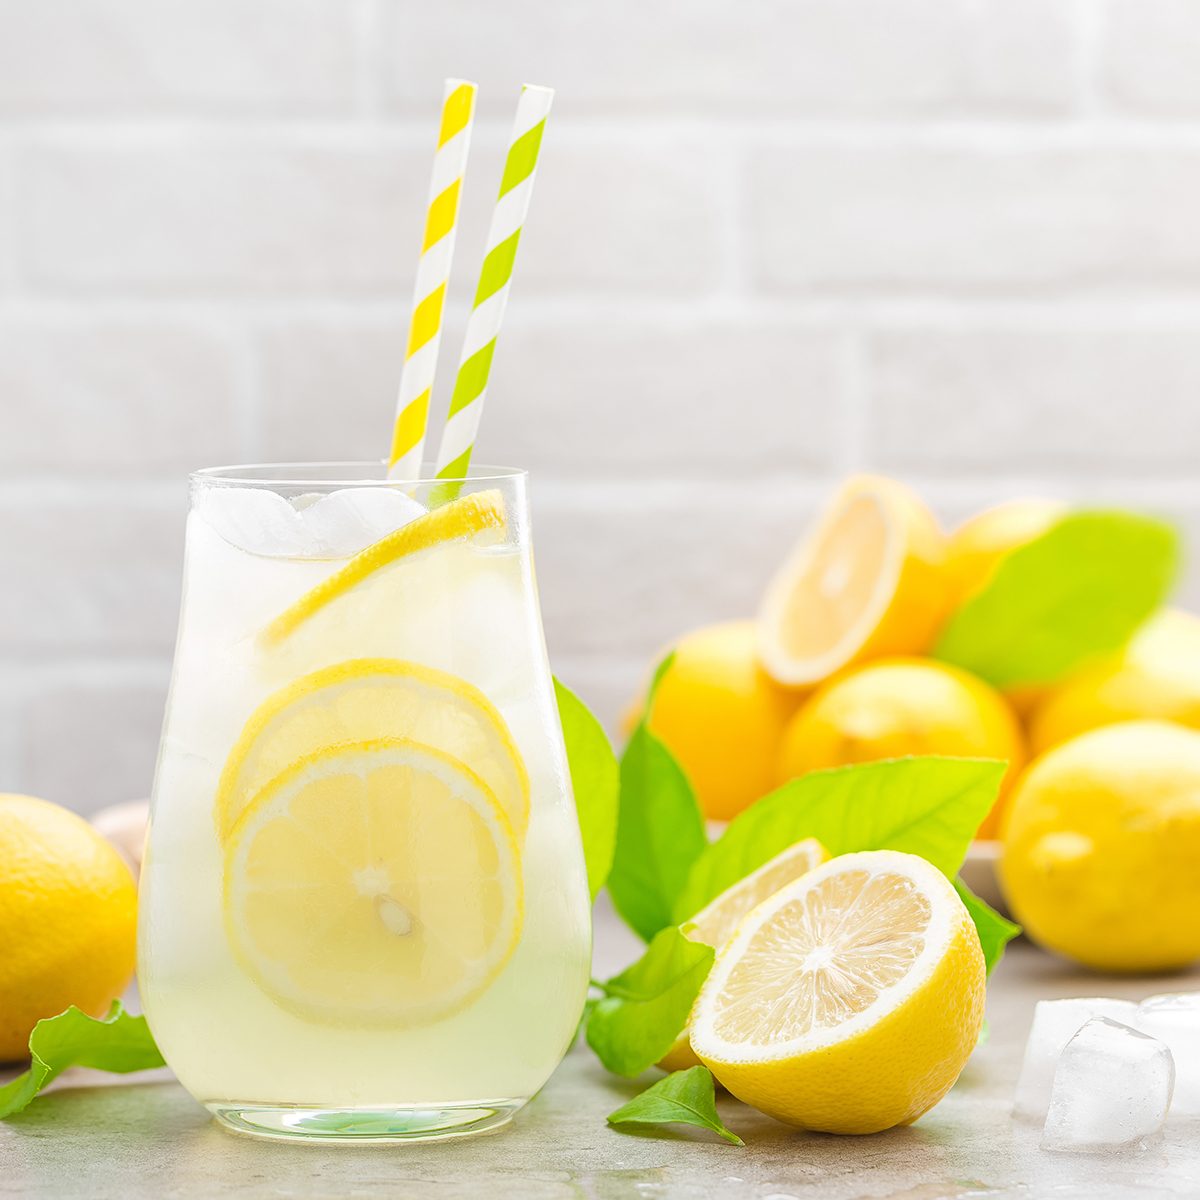 Lemonade. Drink with fresh lemons. Lemon cocktail with juice and ice.